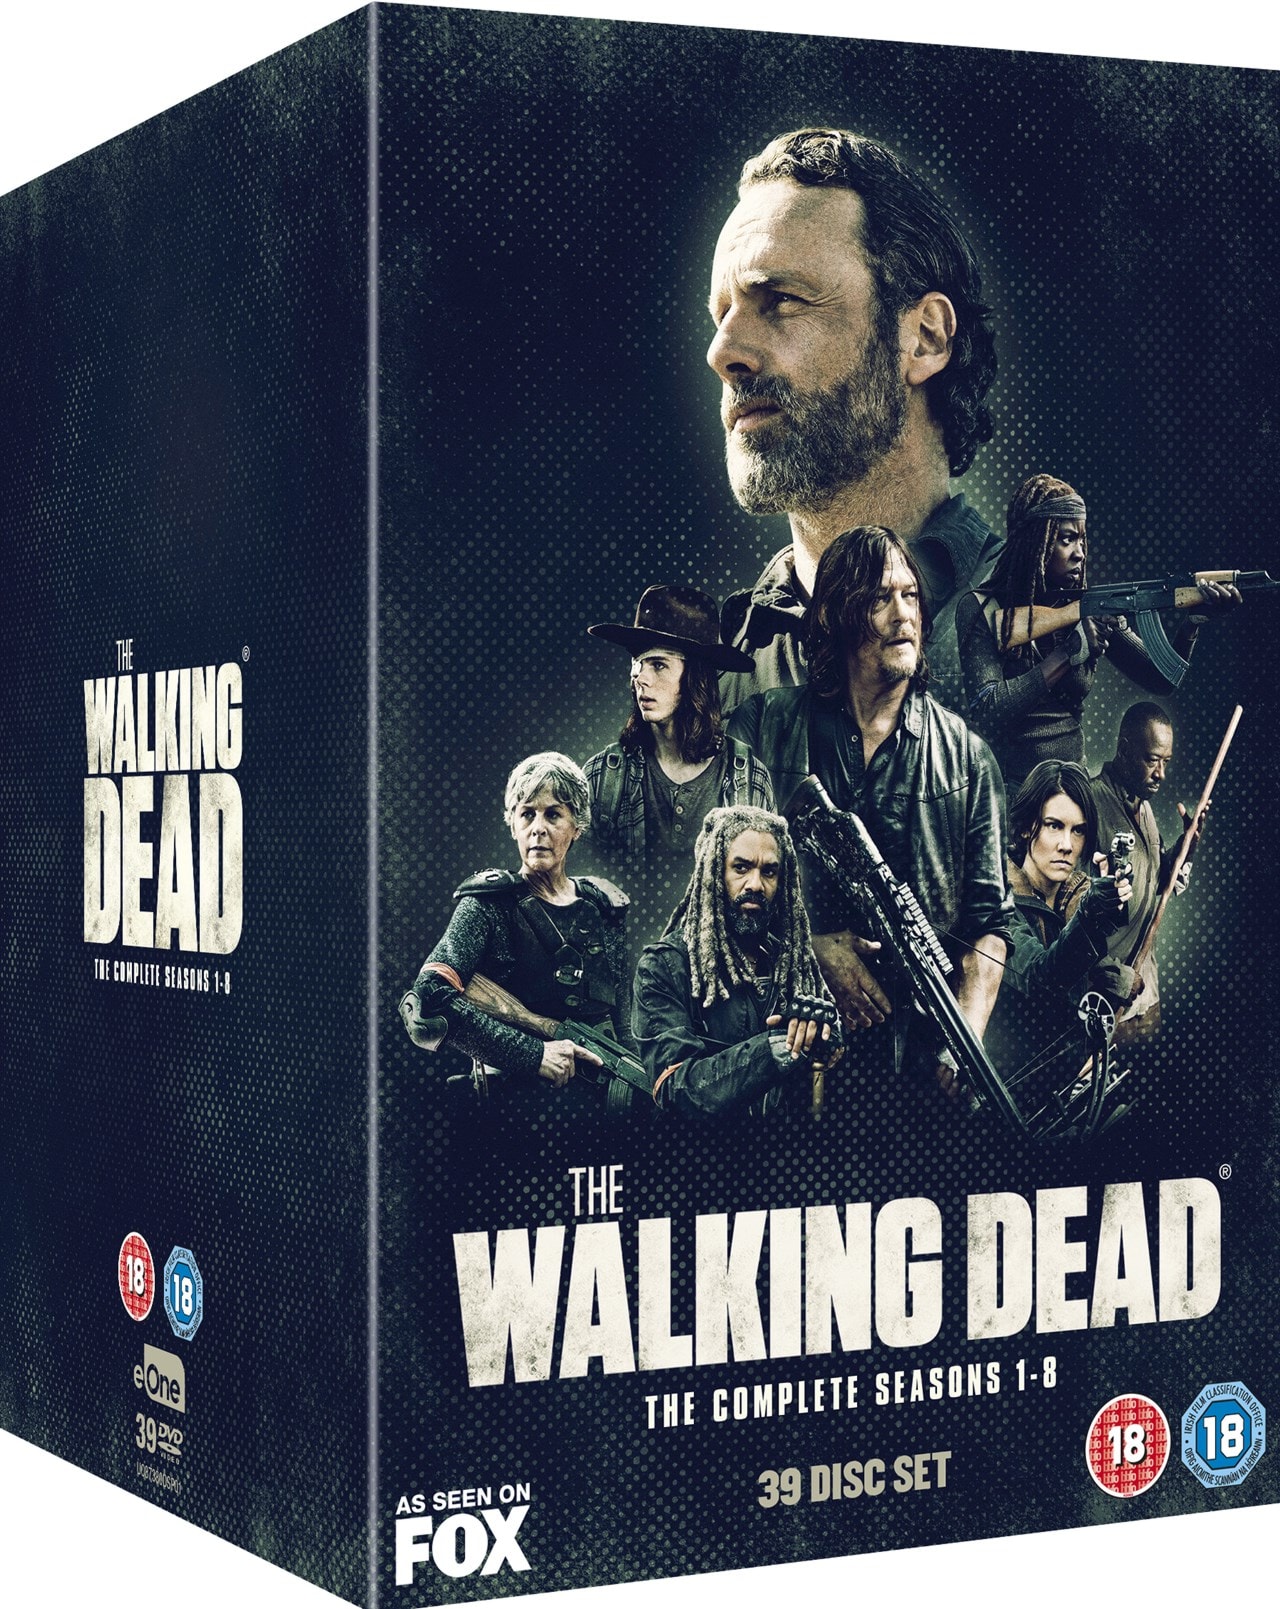 The Walking Dead: The Complete Seasons 1-8 | DVD Box Set | Free